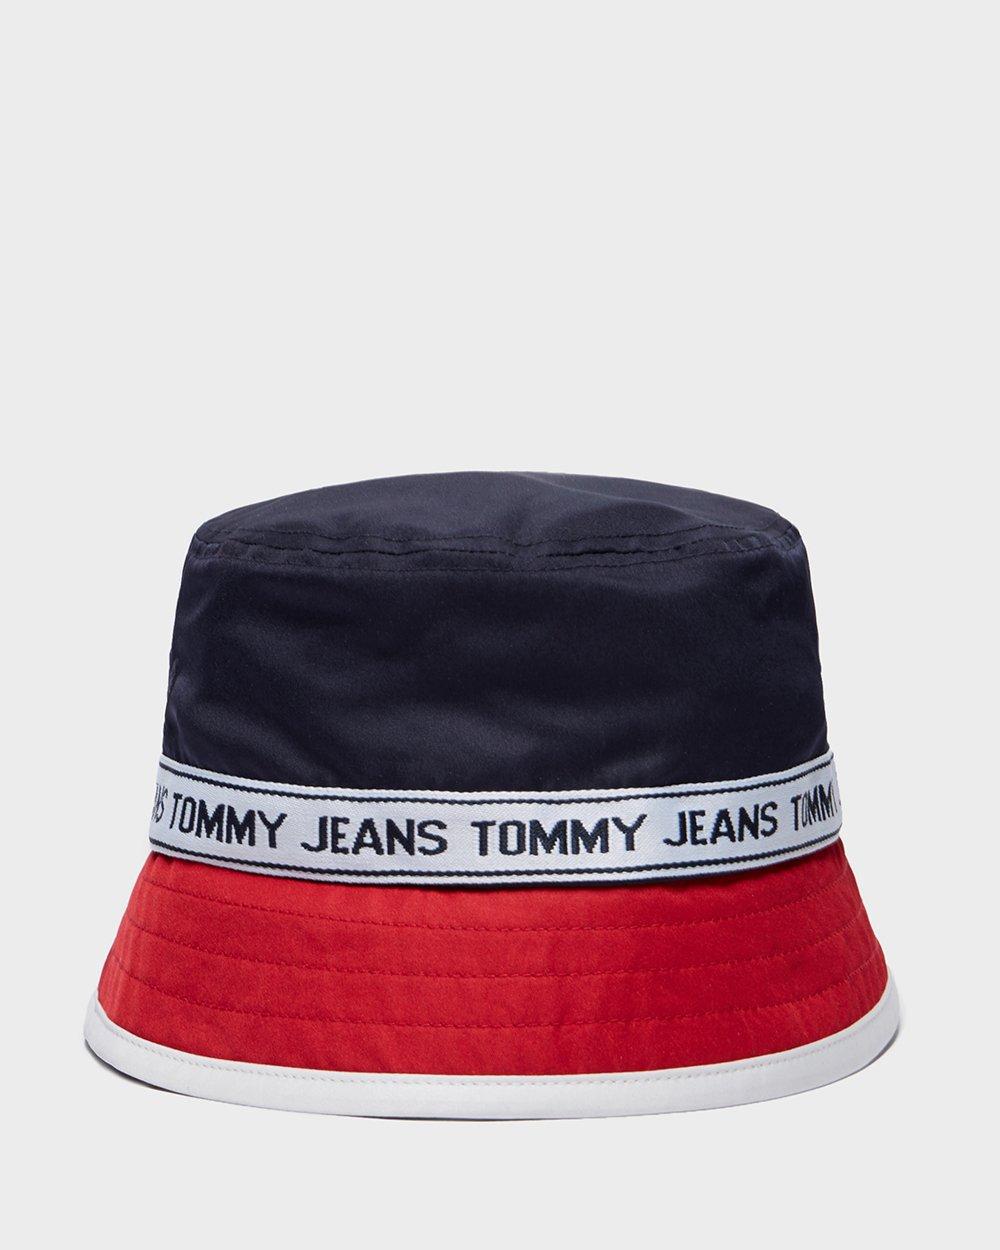 Tommy Hilfiger Denim Tape Bucket Hat - Online Exclusive for Men - Lyst